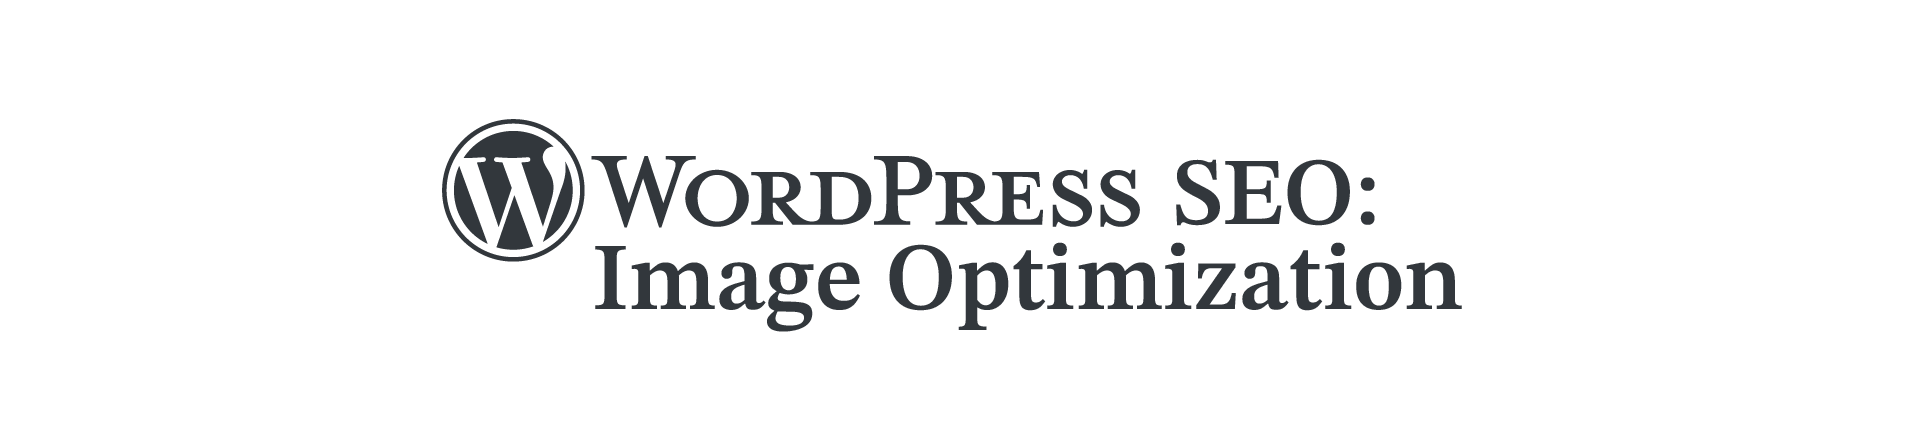 WordPress SEO for the Busy Entrepreneur: Image Optimization